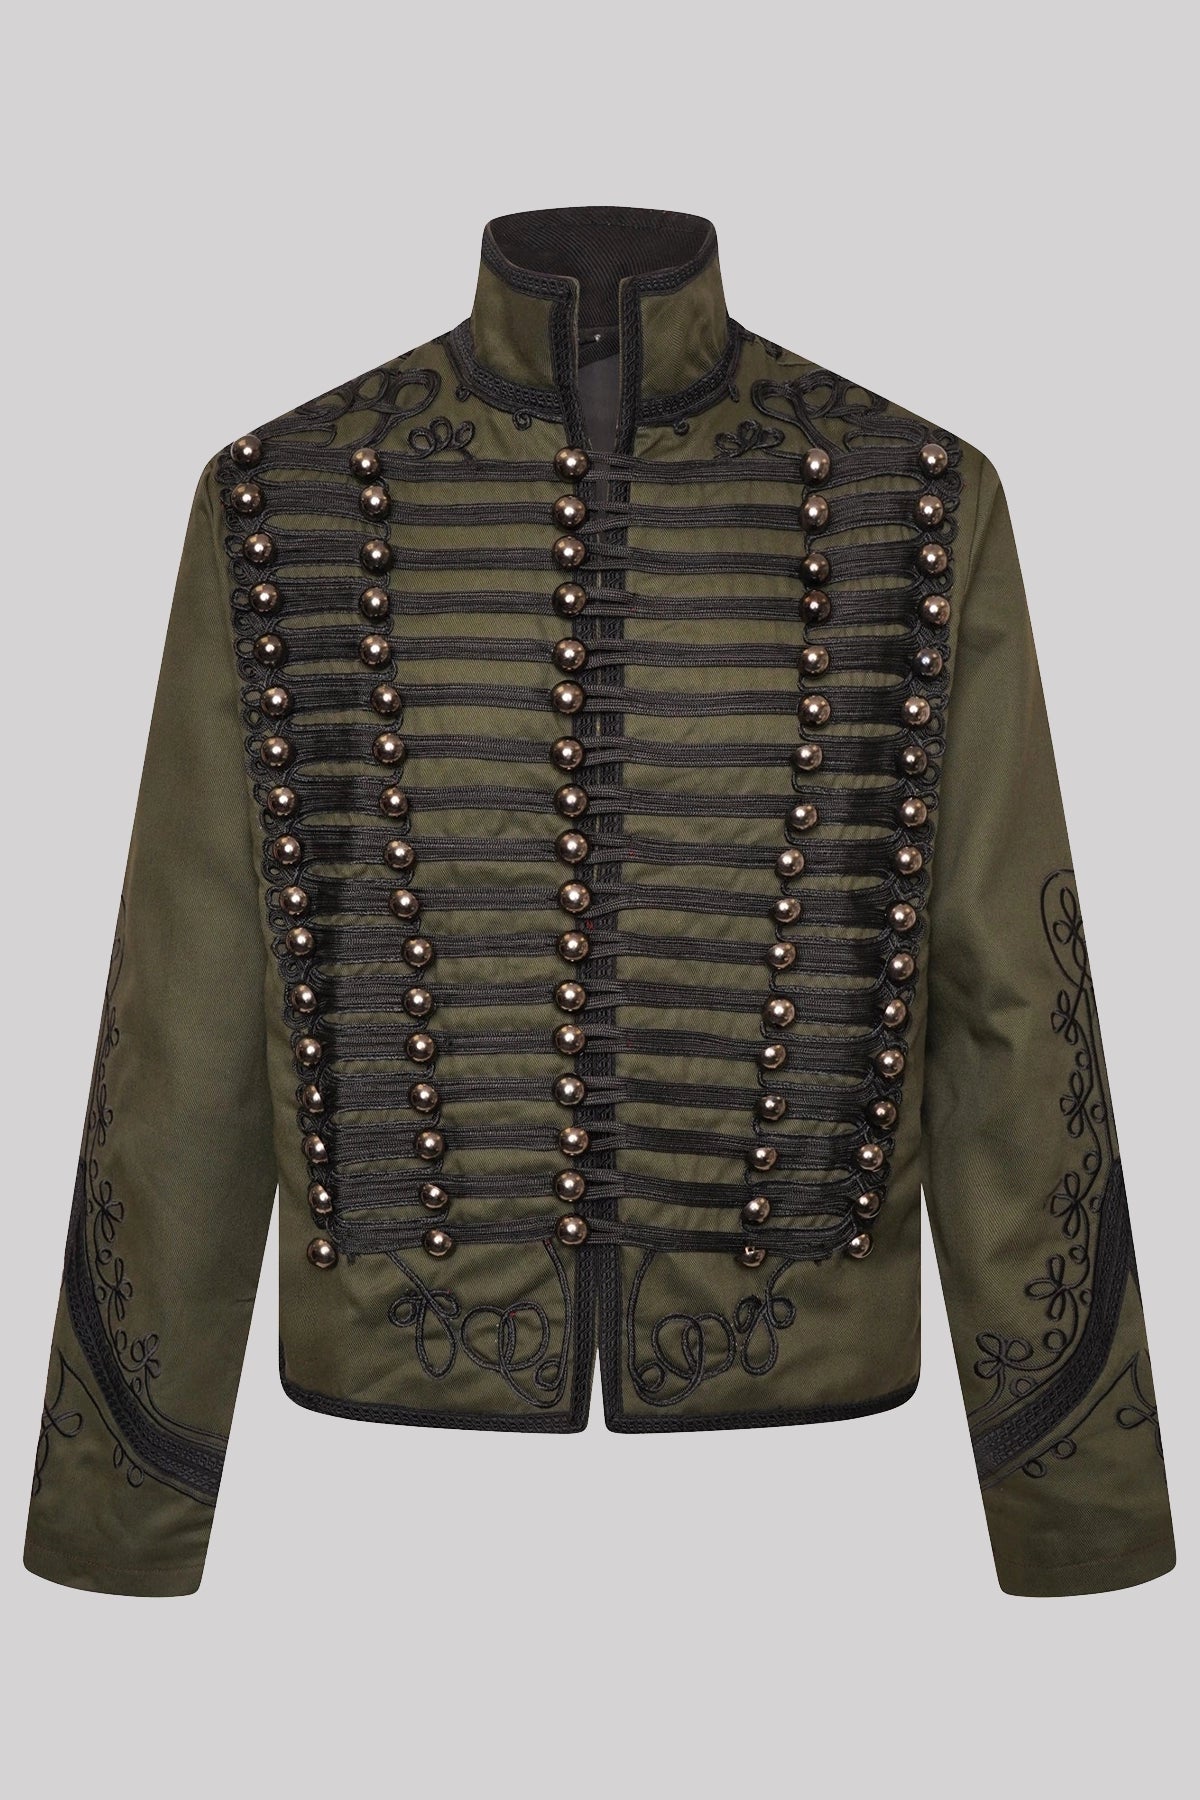 Ro Rox Napoleonic Rifleman Officer Parade Men's Jacket